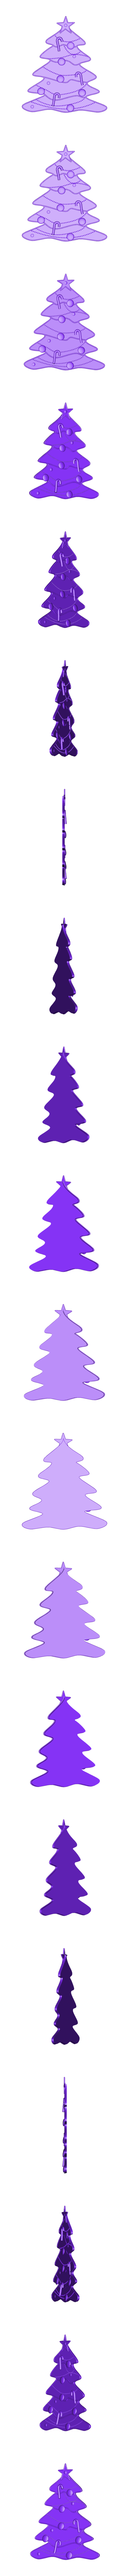 CreativeTools.se_-_ZPrinter-model_-_Christmas_tree.stl Download free STL file Flat decorative Christmas tree • 3D printer template, CreativeTools